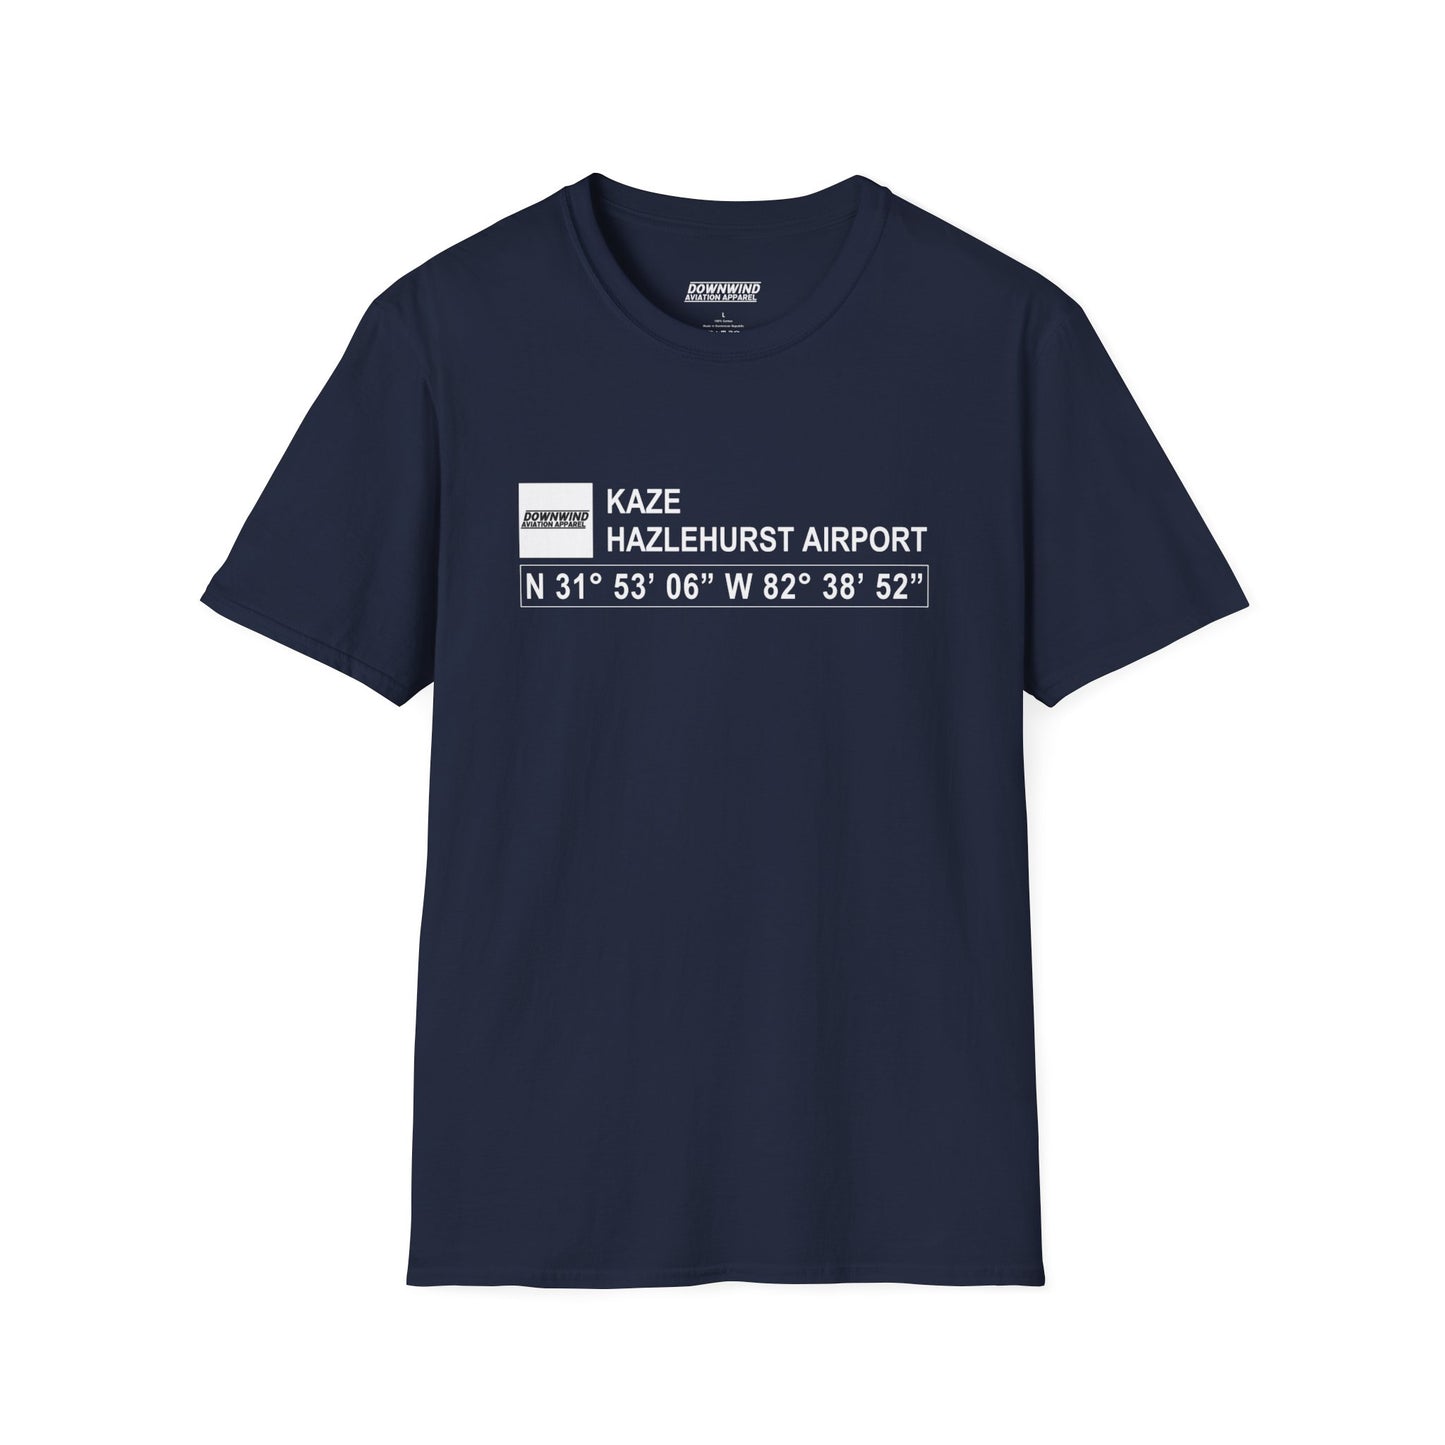 KAZE / Hazlehurst Airport T-Shirt